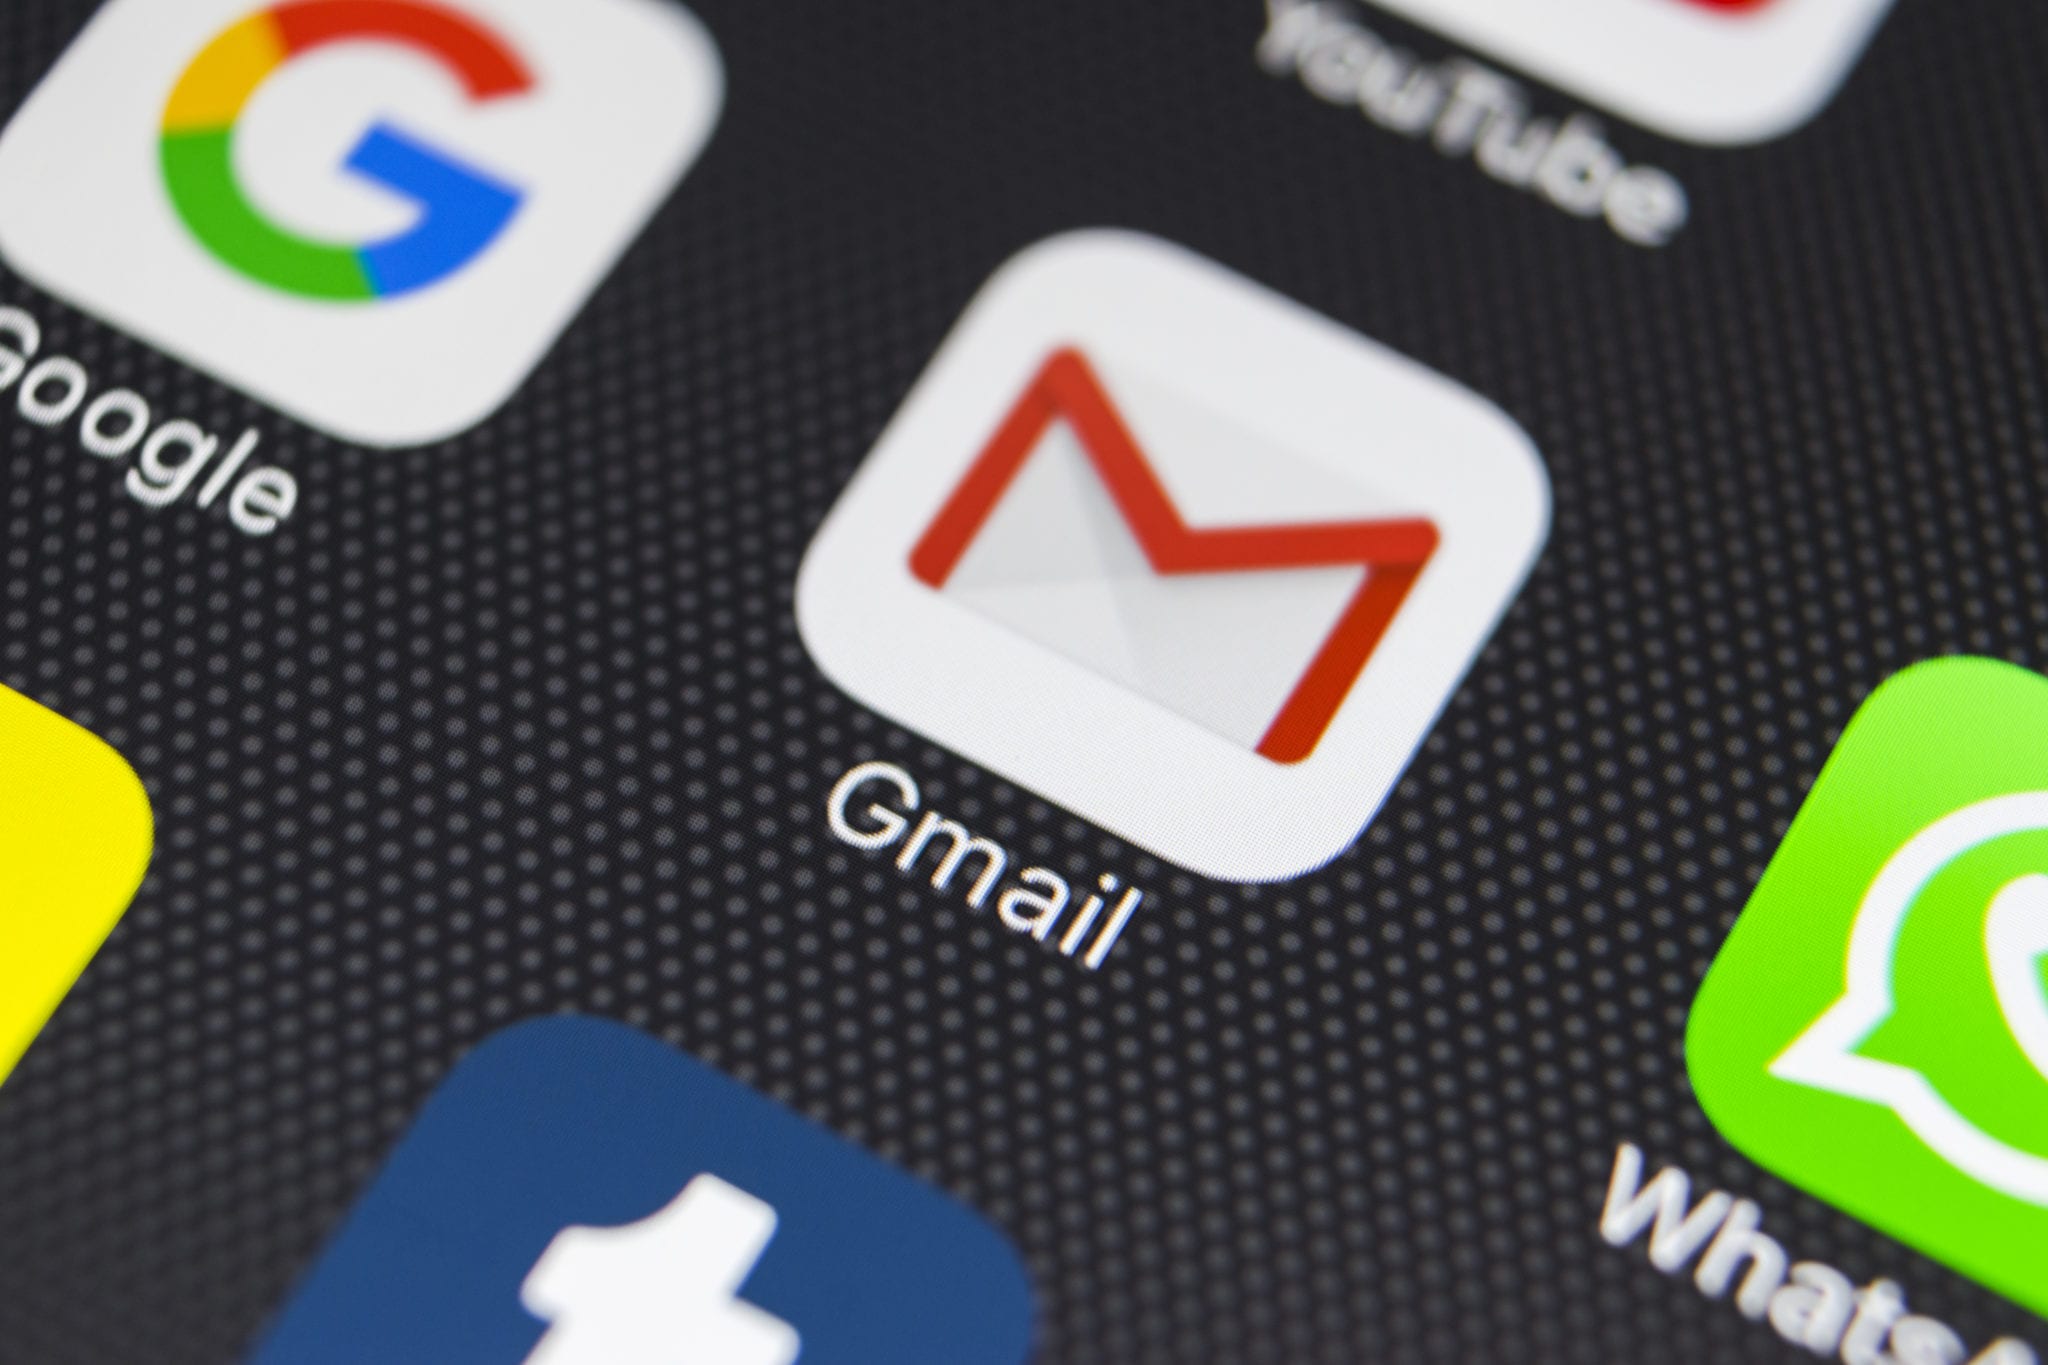 Google Gmail application icon on Apple